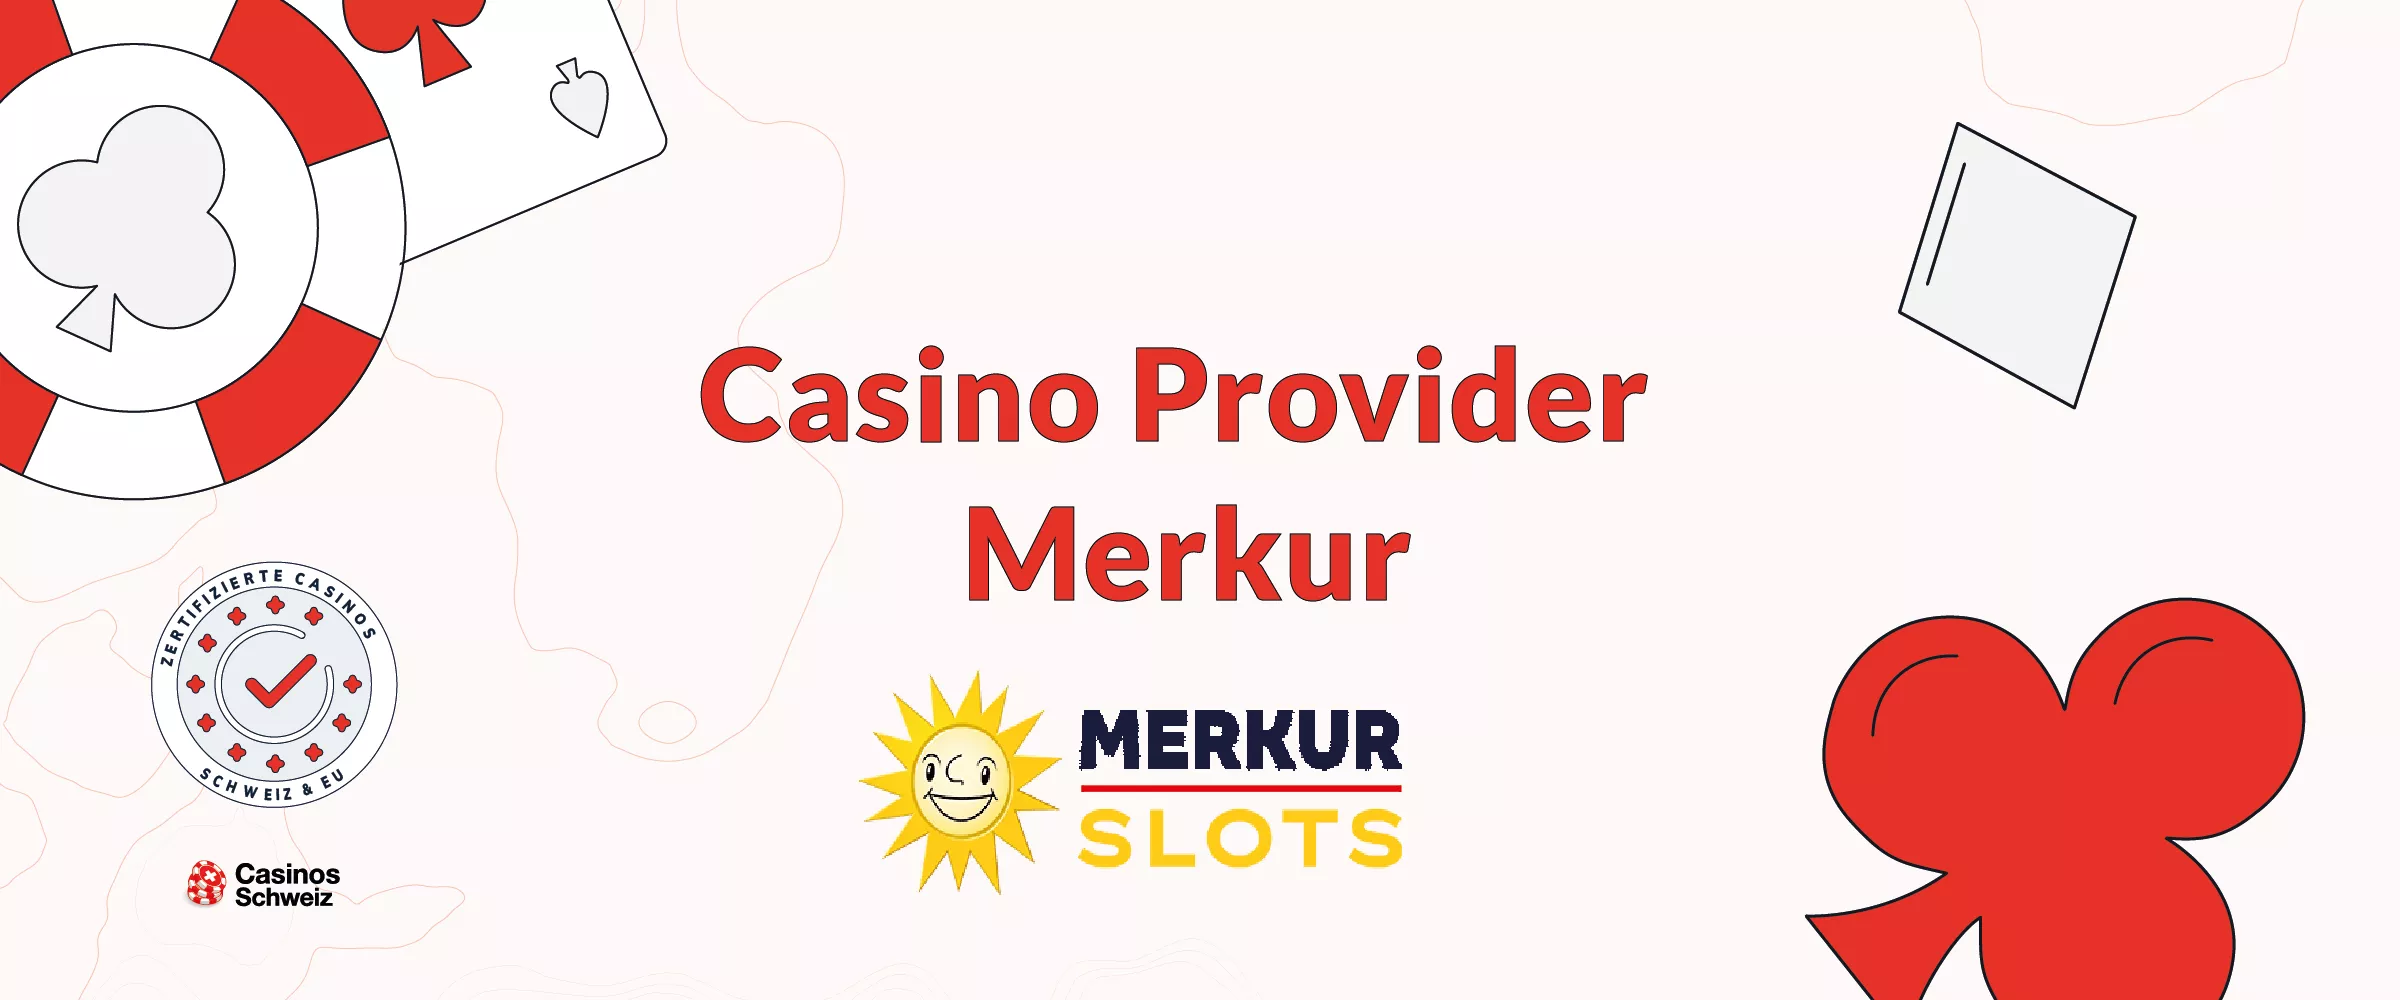 Casino Provider Merkur